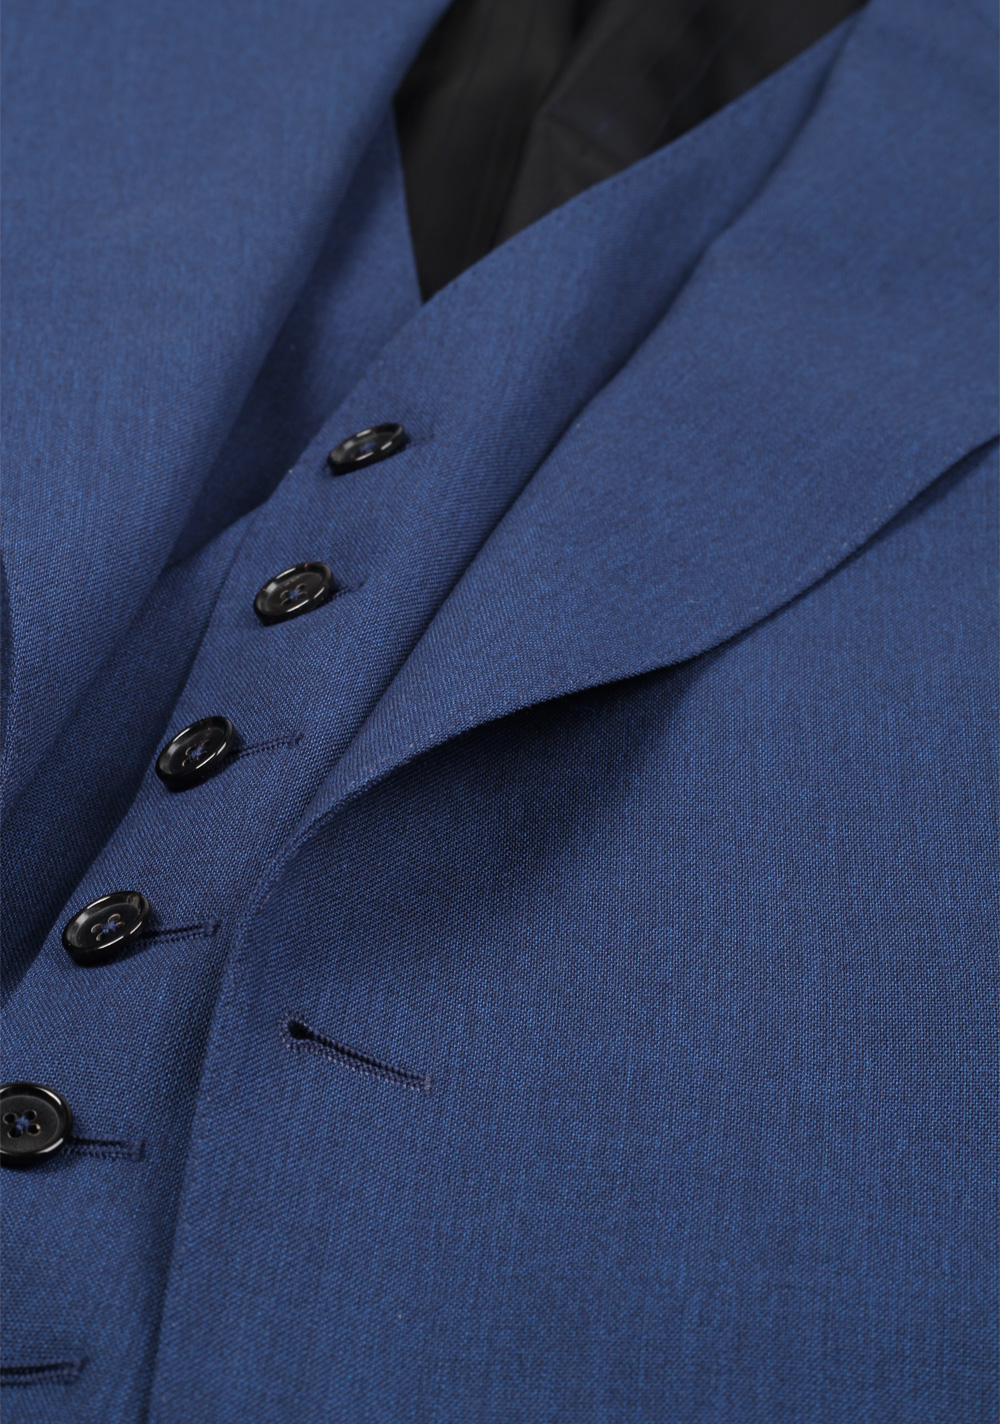 TOM FORD Windsor Royal Blue 3 Piece Suit Size 54 / 44R U.S. Wool Fit A | Costume Limité